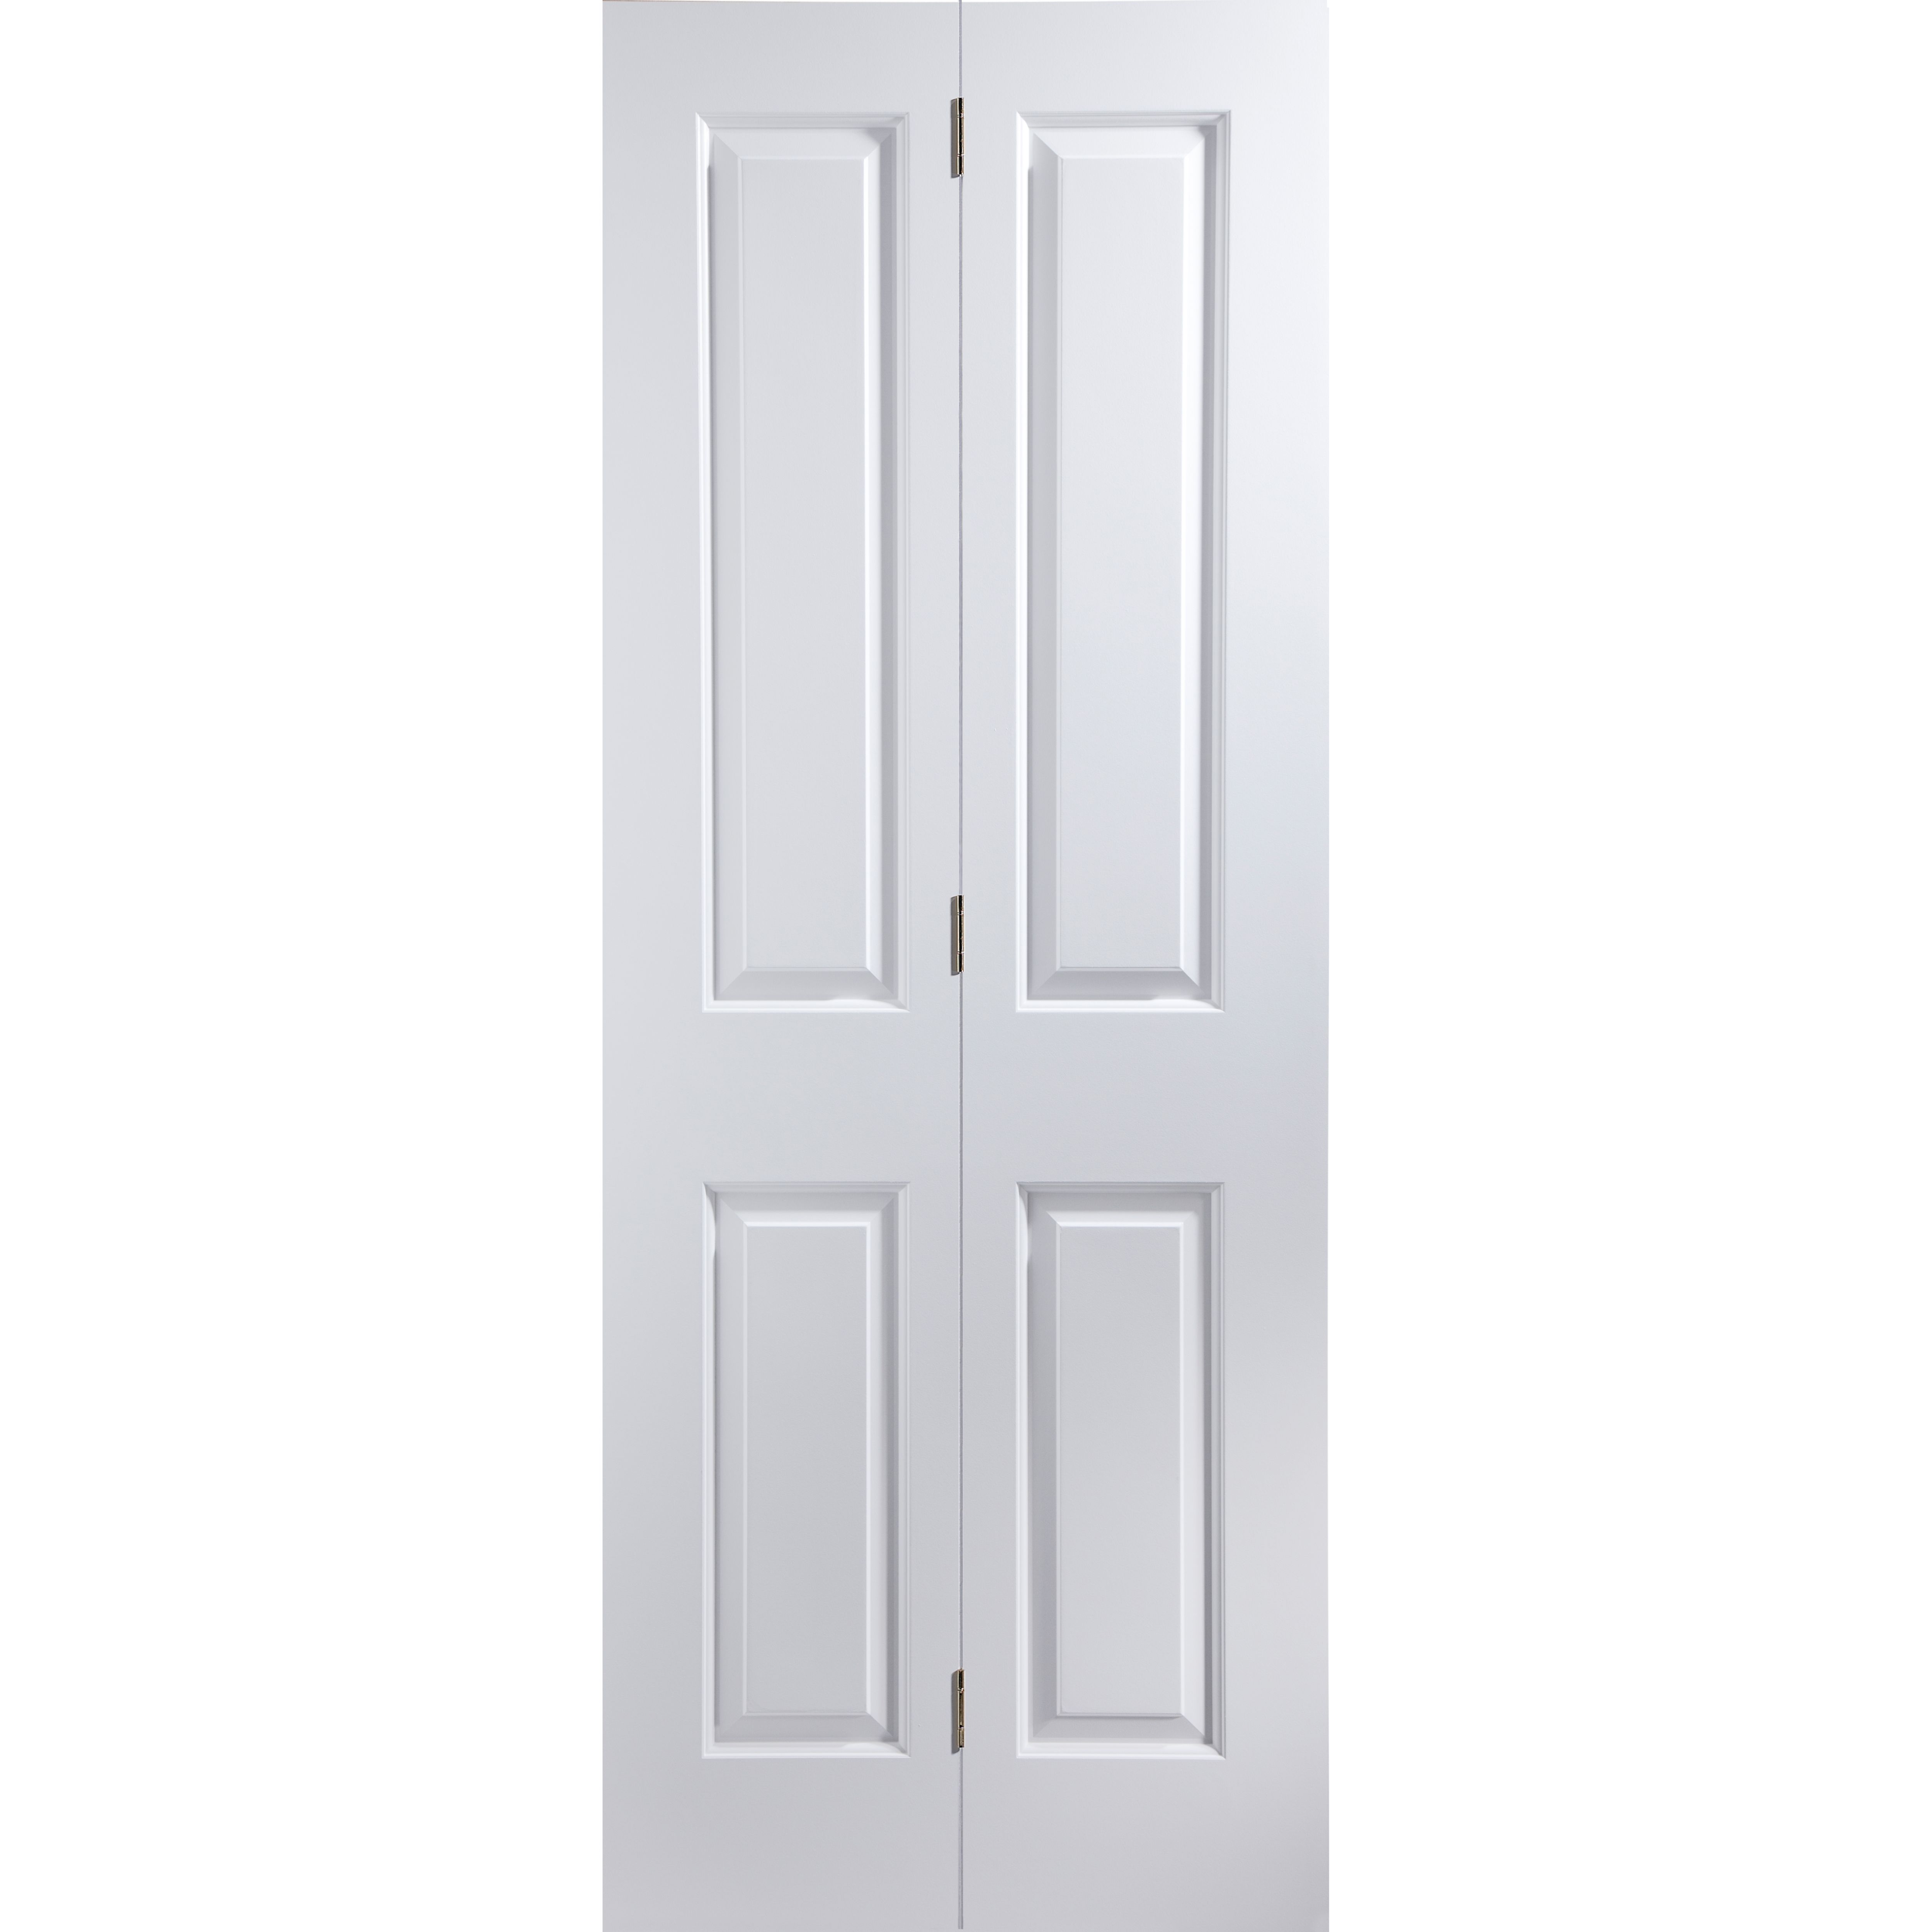 4 panel Unglazed Contemporary White Internal Bi-fold Door set, (H)1950mm (W)674mm